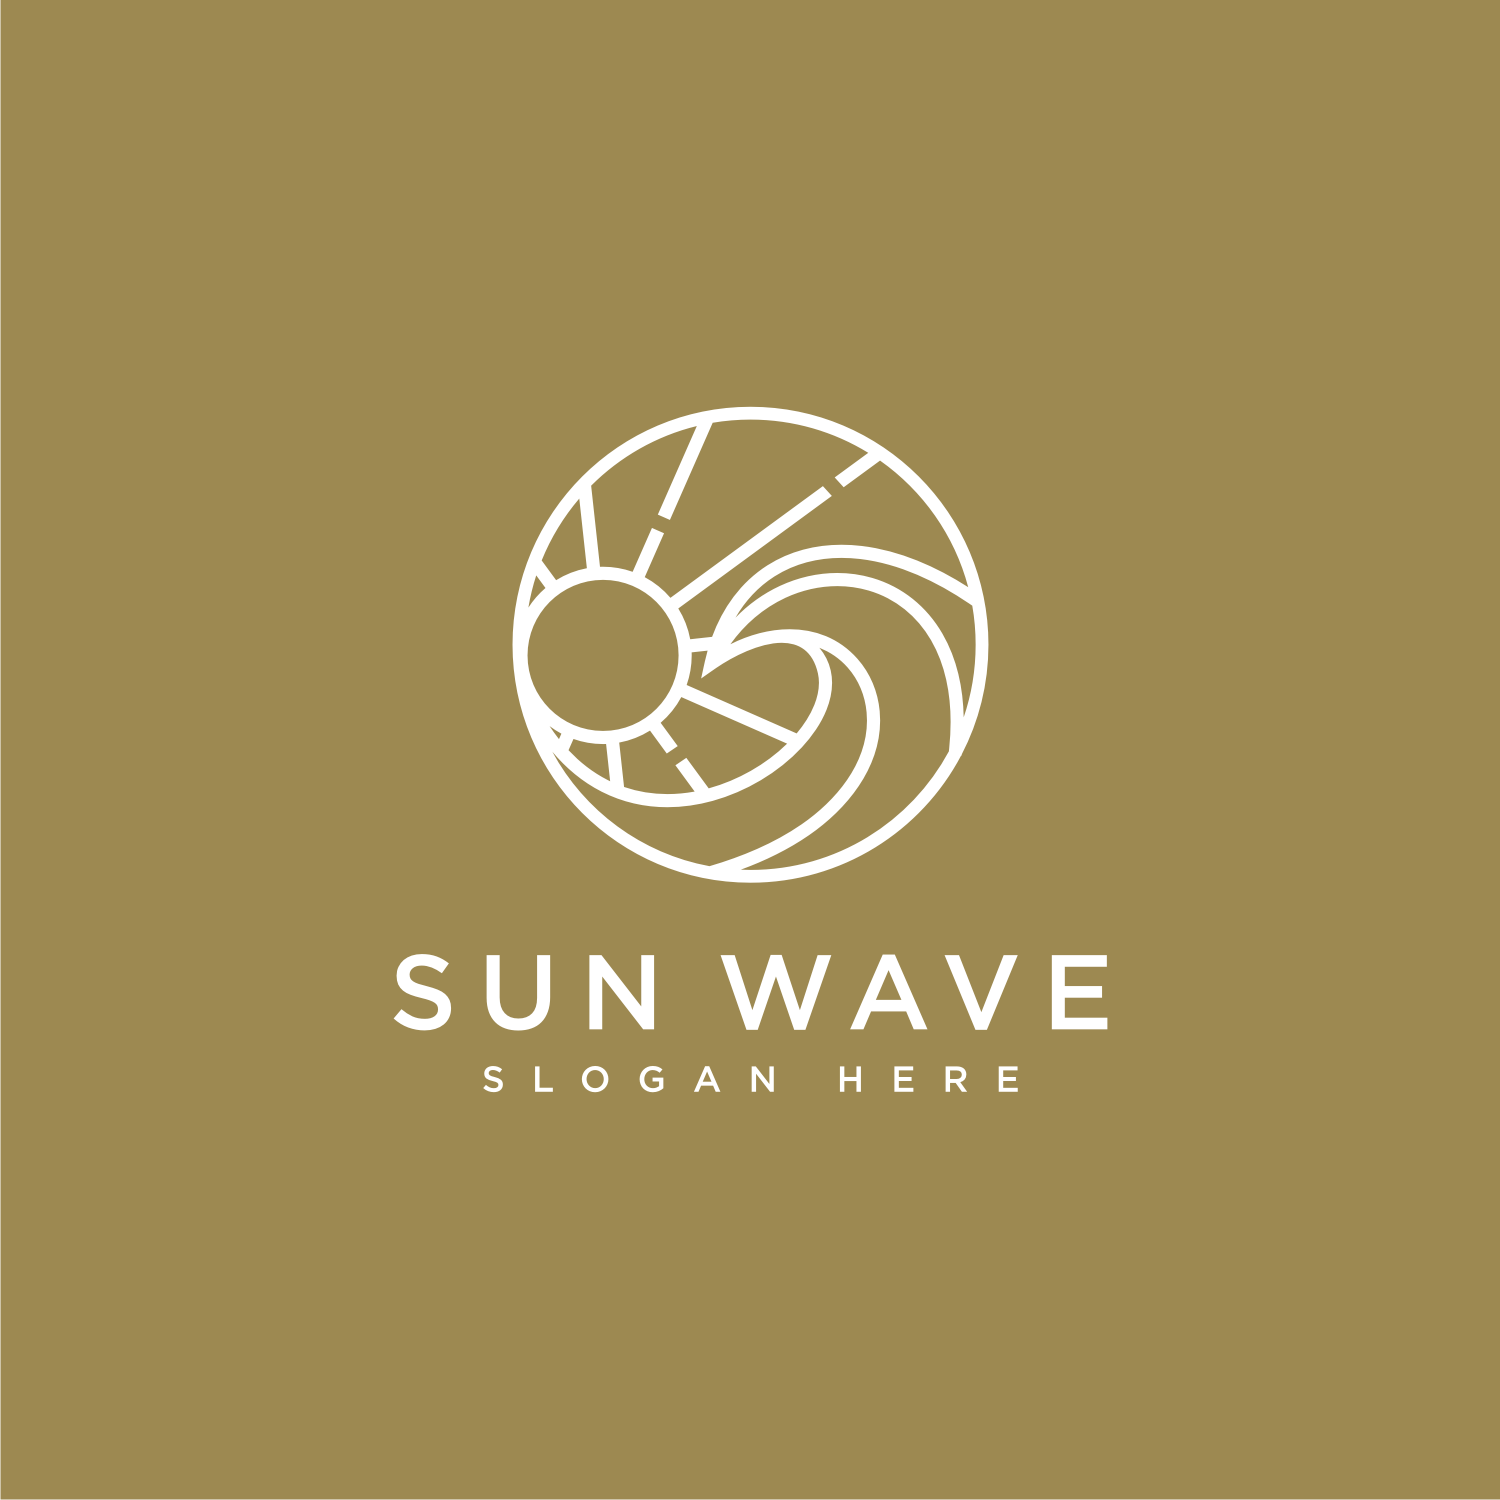 Sunset Wave Logo Design Template previews.